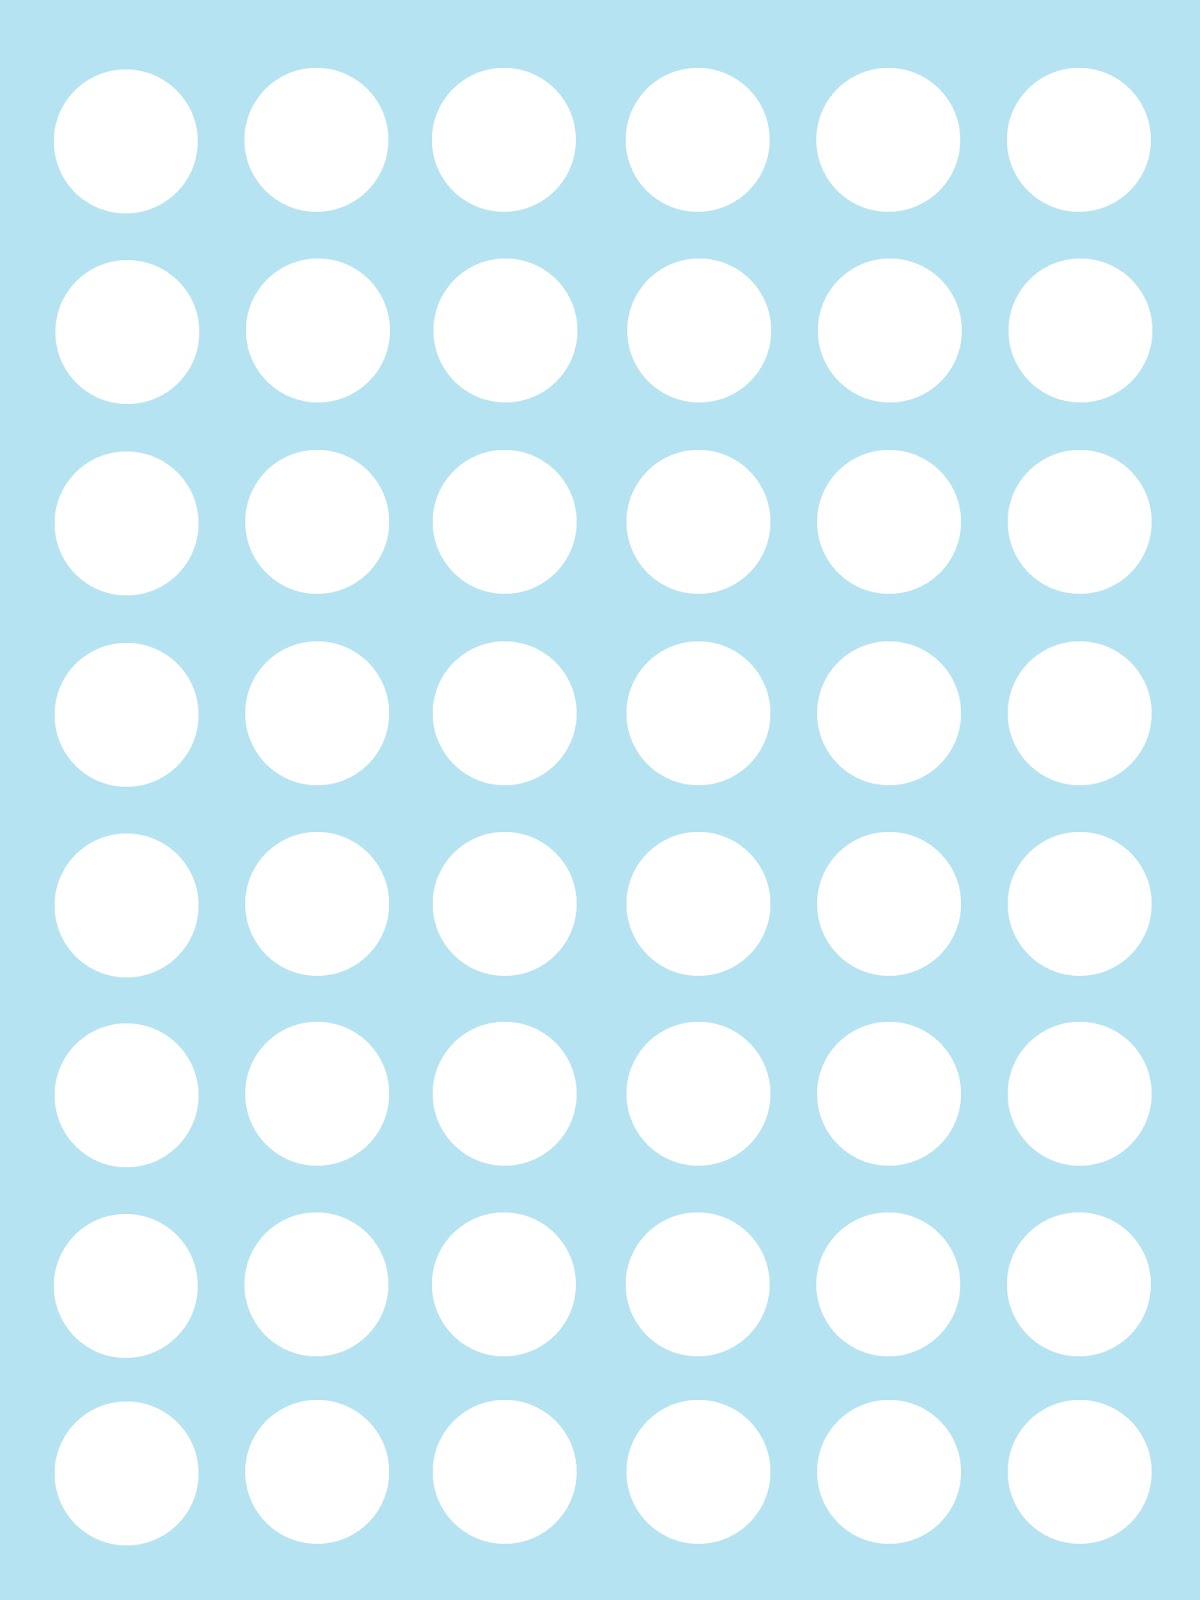 Printables Background Wallpaper Patterns Polka Dots Baby Blue